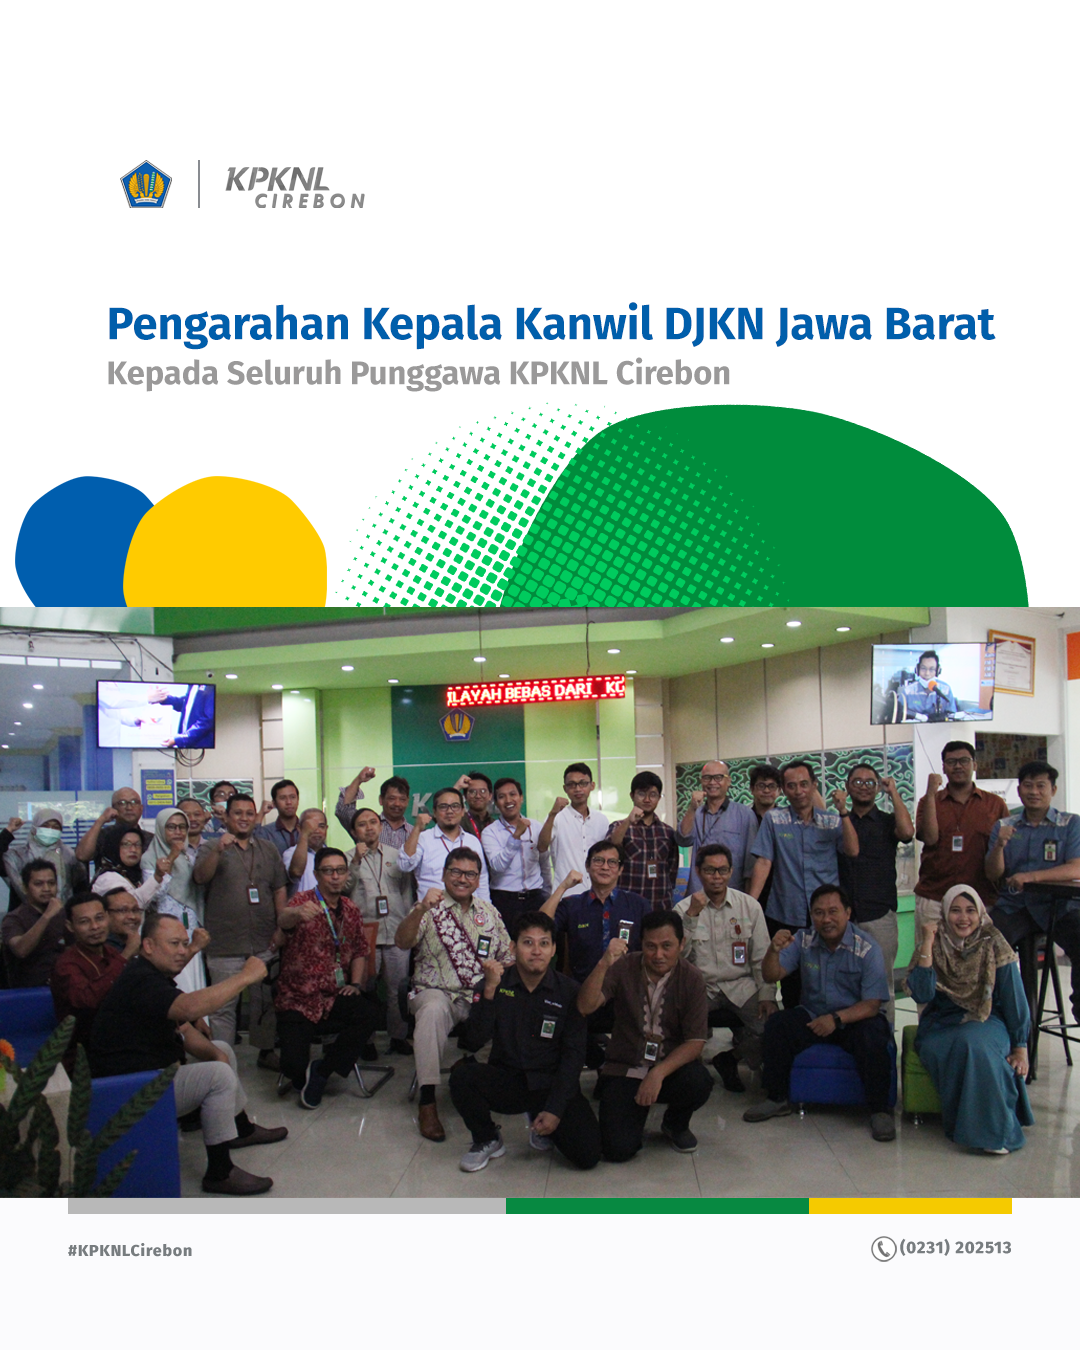 Pengarahan Kepala Kanwil DJKN Jawa Barat Kepada Seluruh Punggawa KPKNL Cirebon